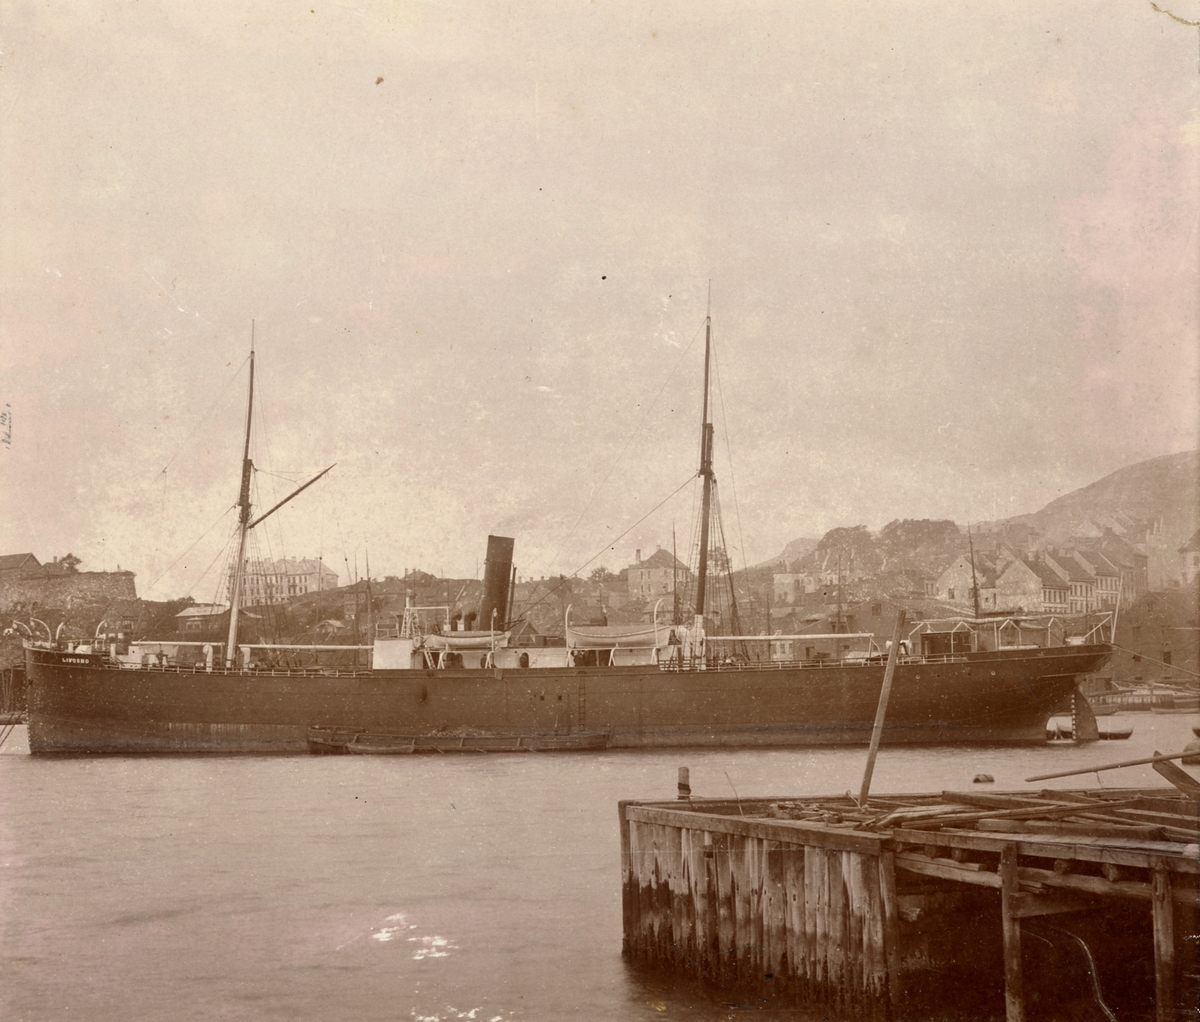 Dampskipet Livorno i havn ved Ålesund. Motiv tatt fra Tyskerholmen